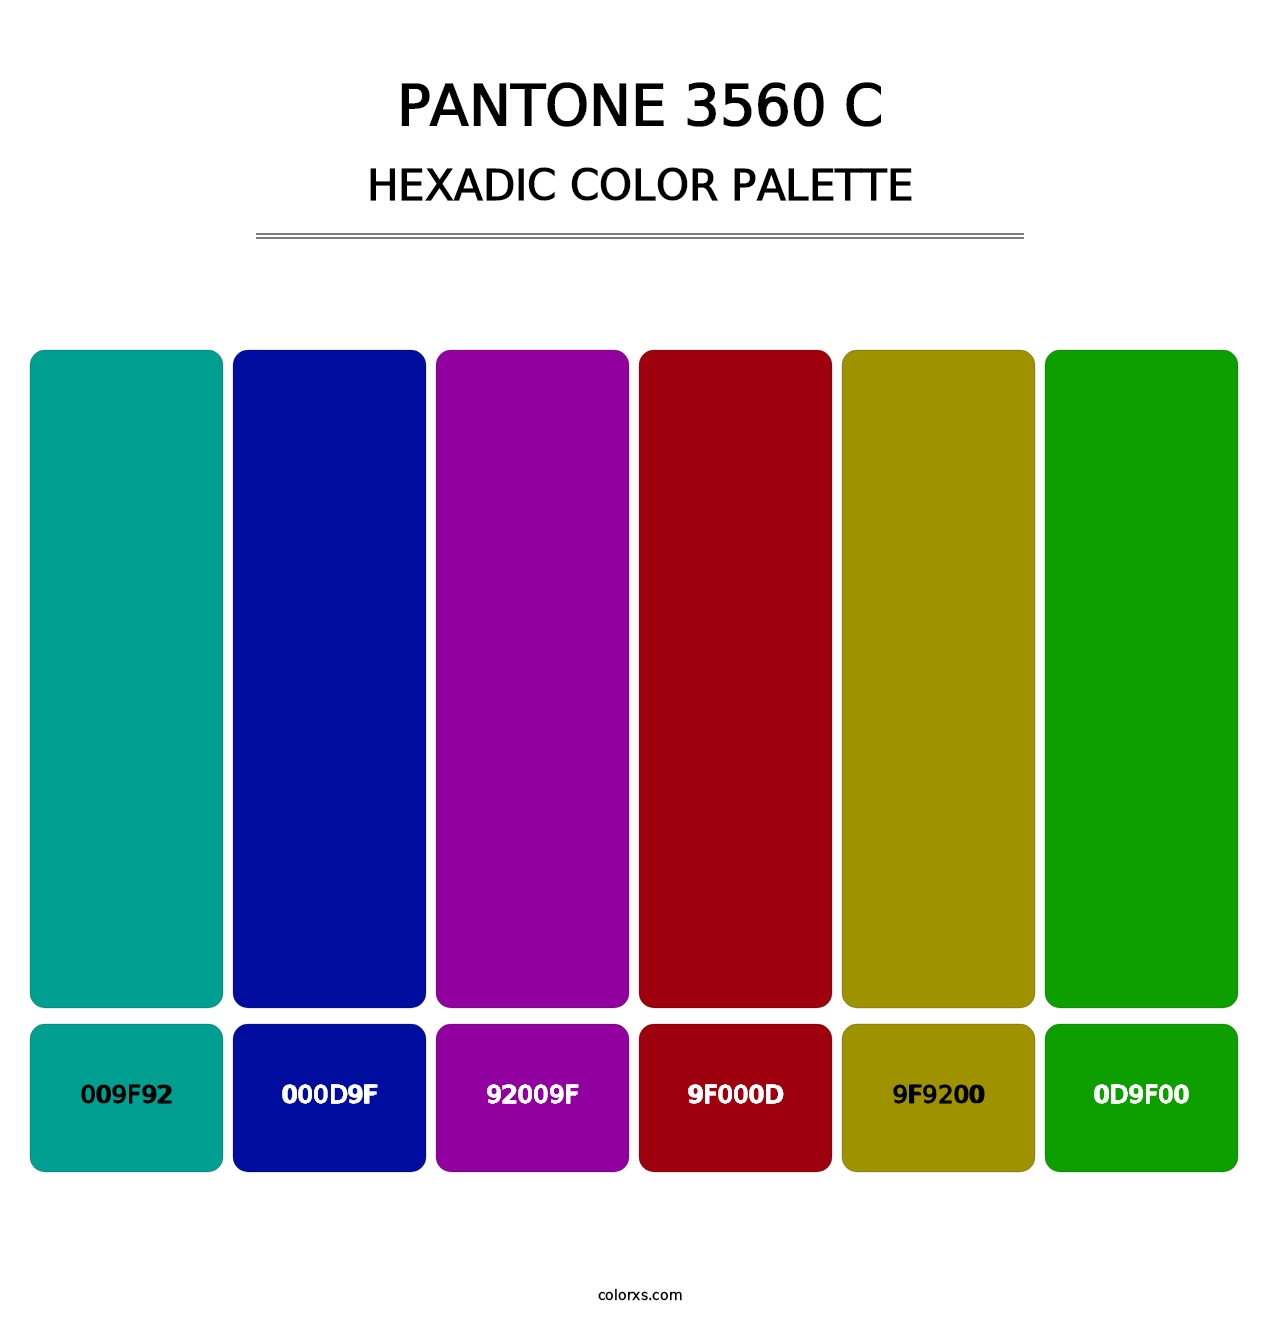 PANTONE 3560 C - Hexadic Color Palette